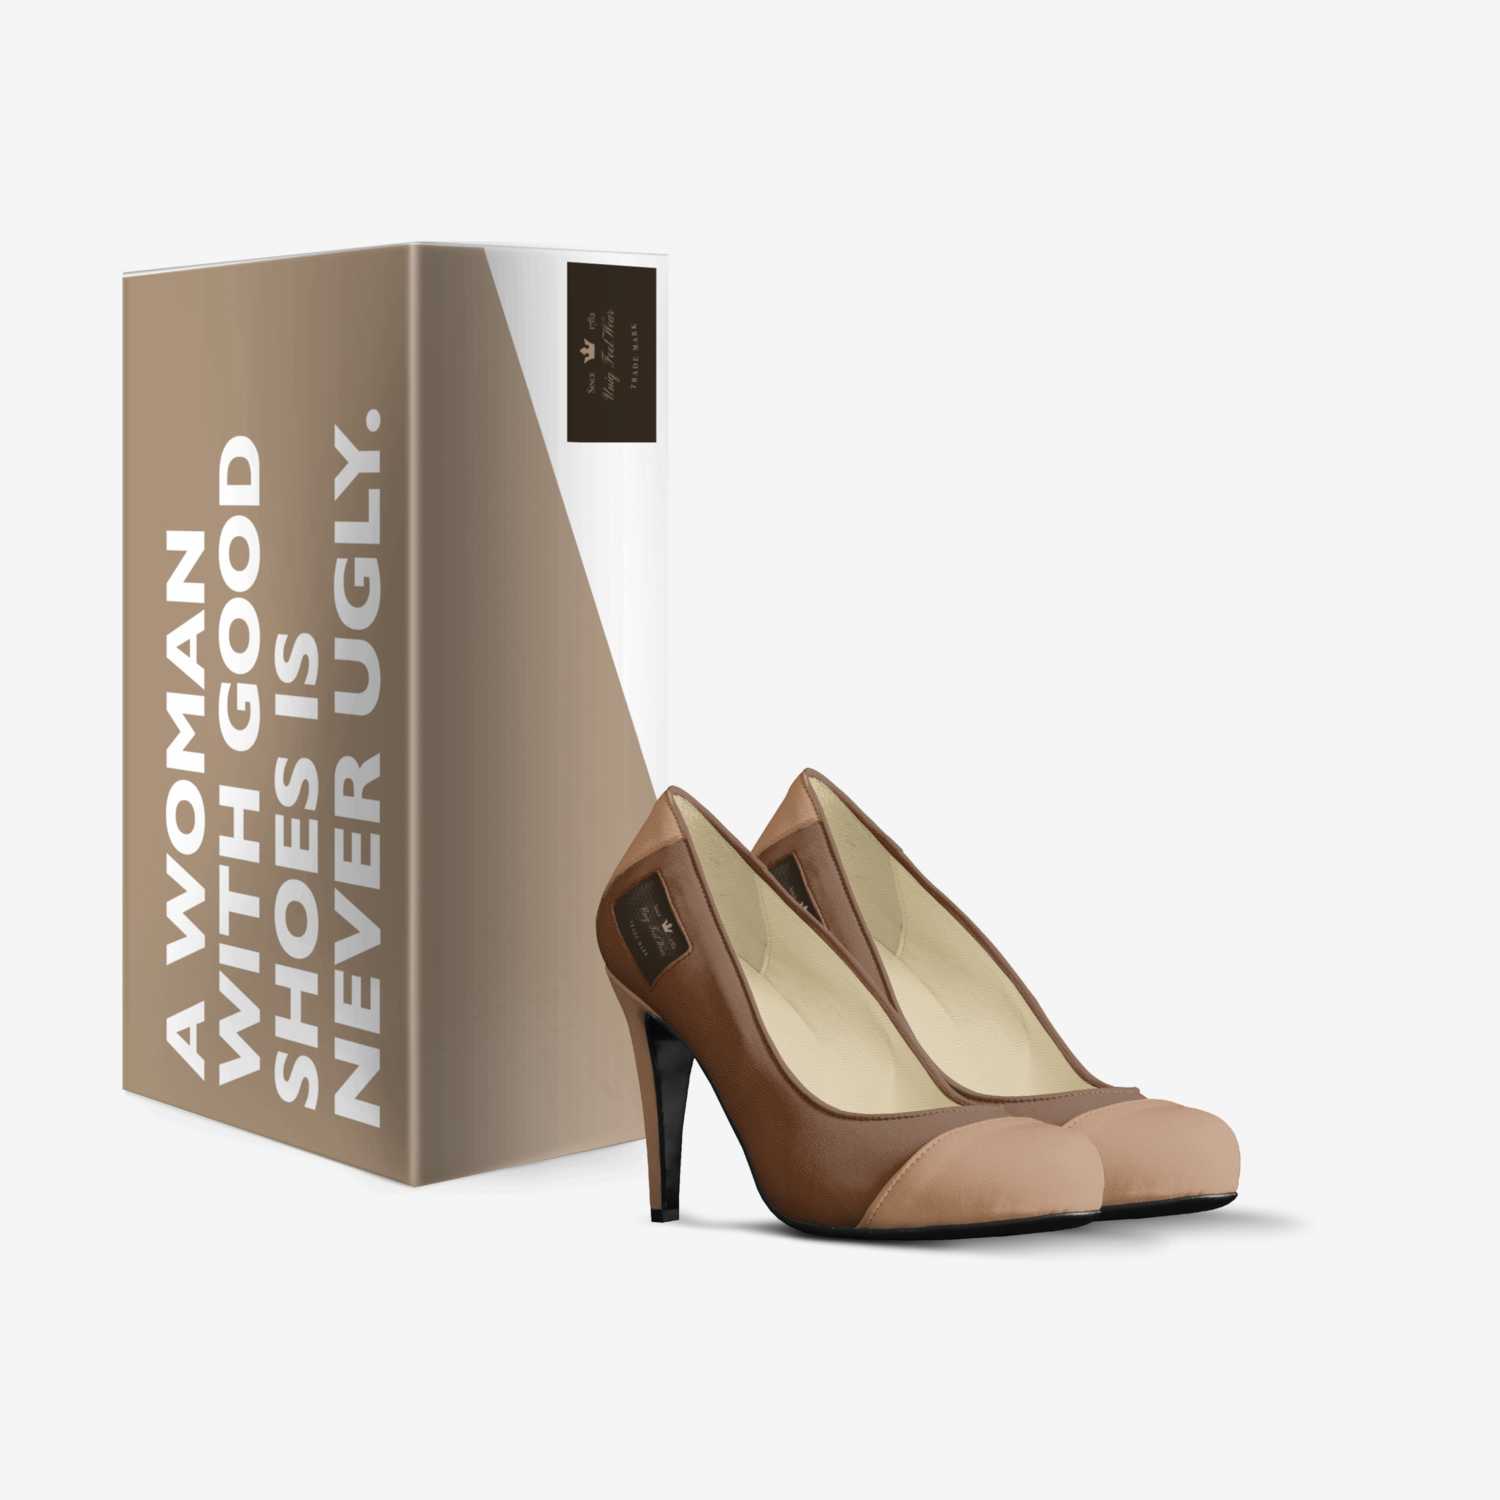 Uniq Foot Wear custom made in Italy shoes by Jethro Tsamaesi | Box view